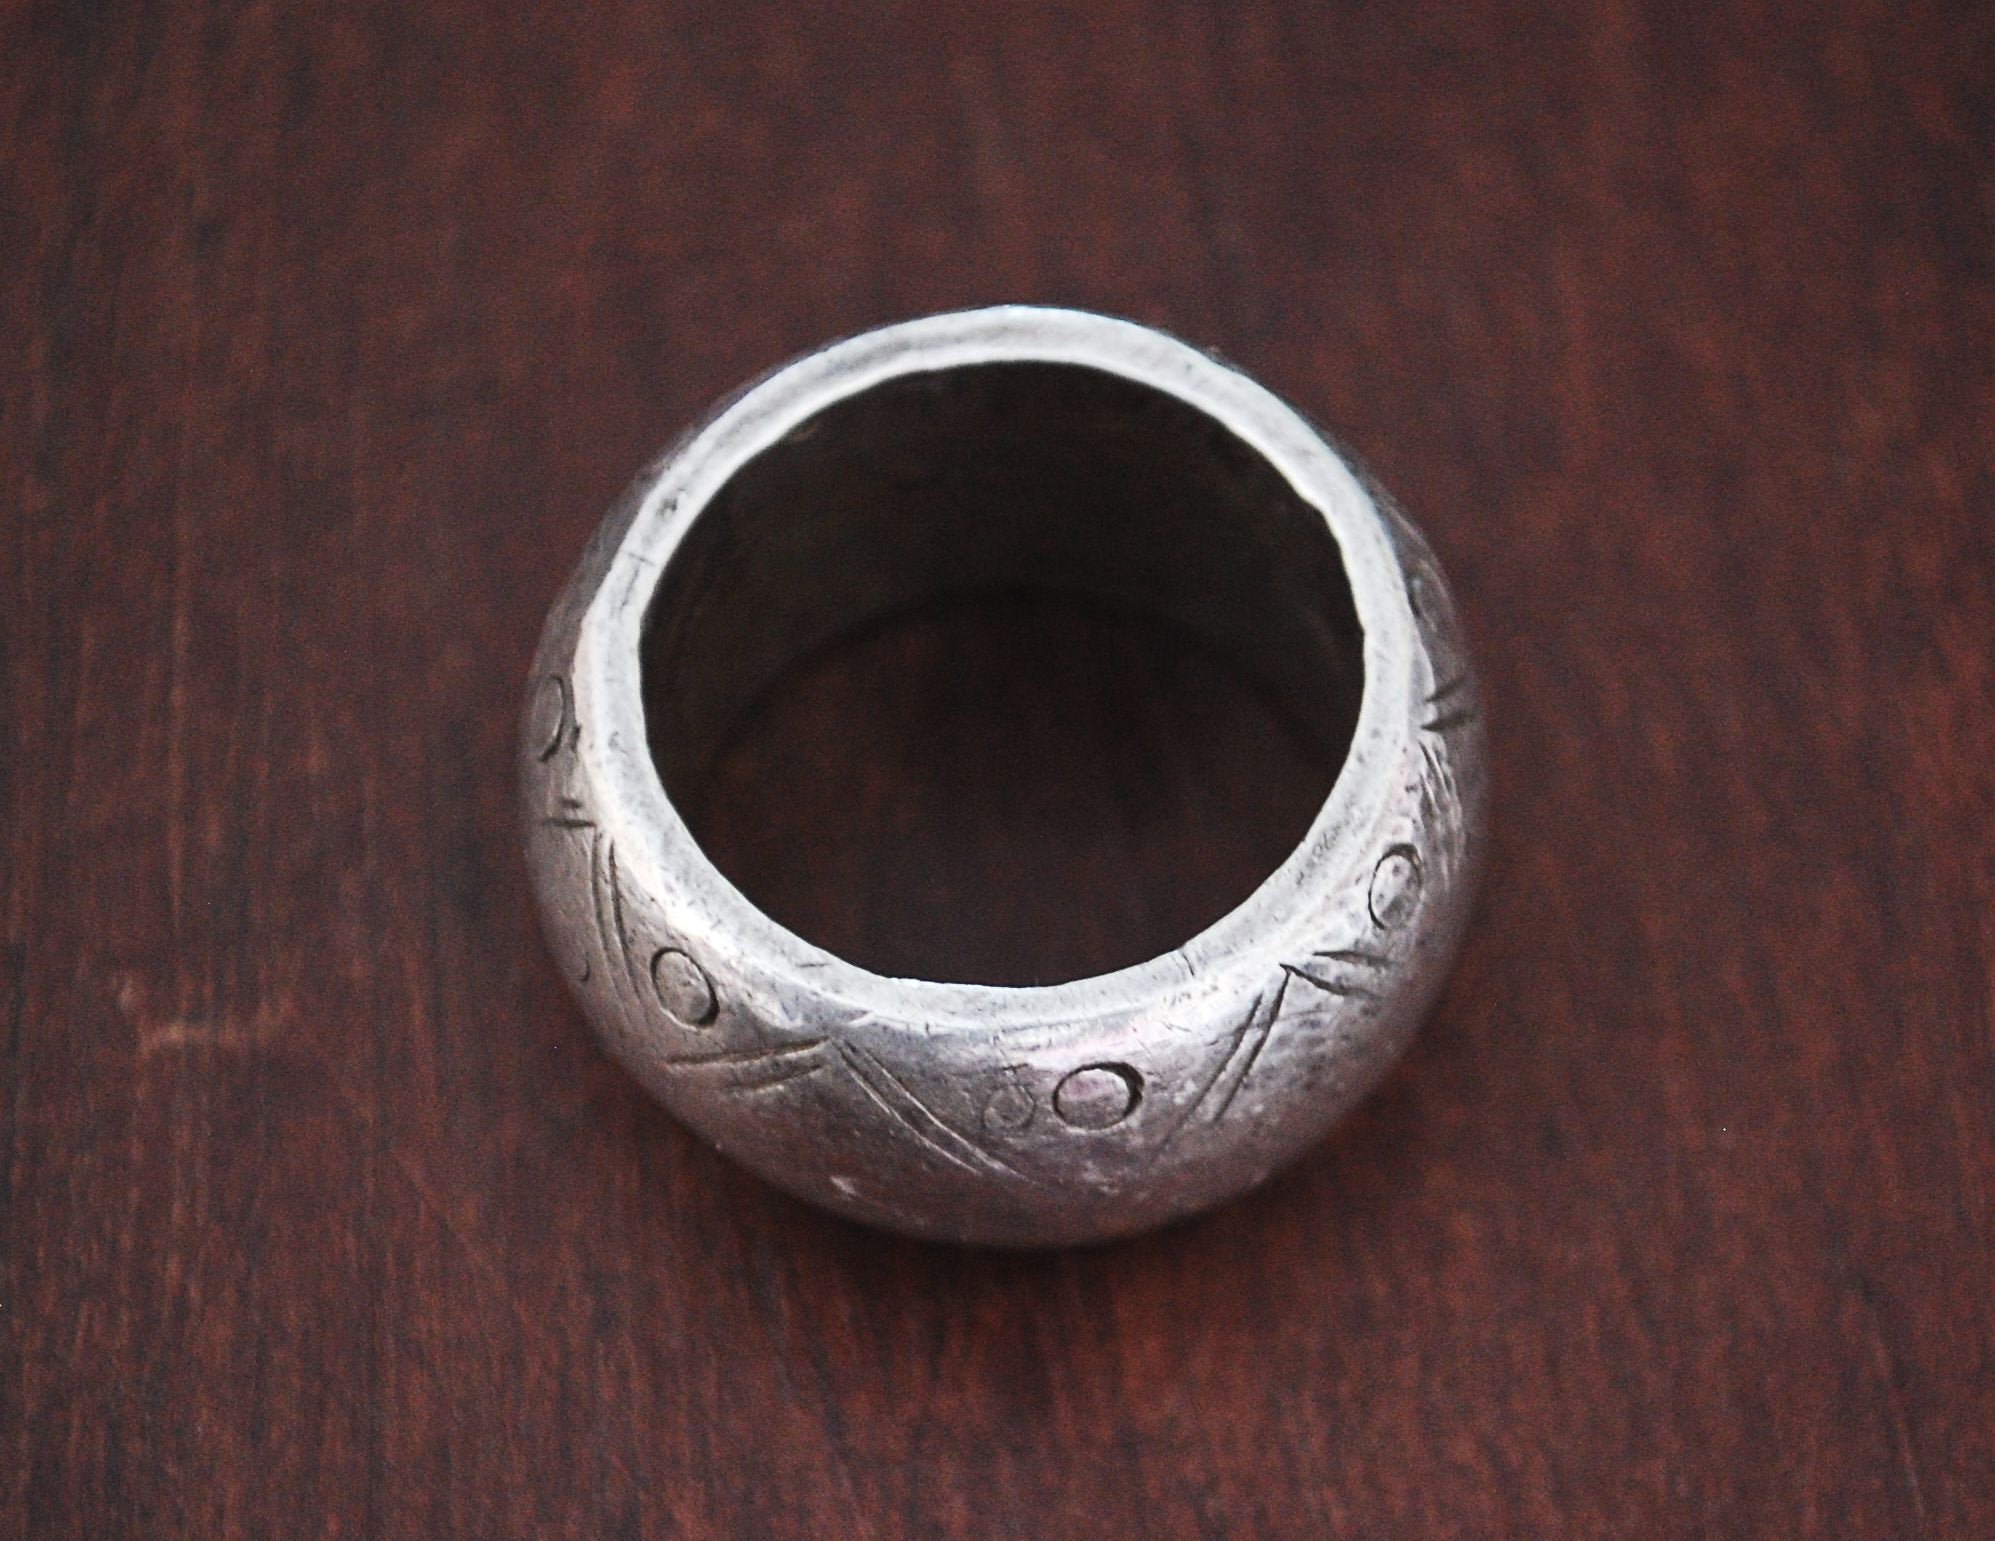 Antique Ethiopian Silver Ring - Size 8 - Ethiopian Jewelry - Tribal Silver Ring - Tribal Jewelry